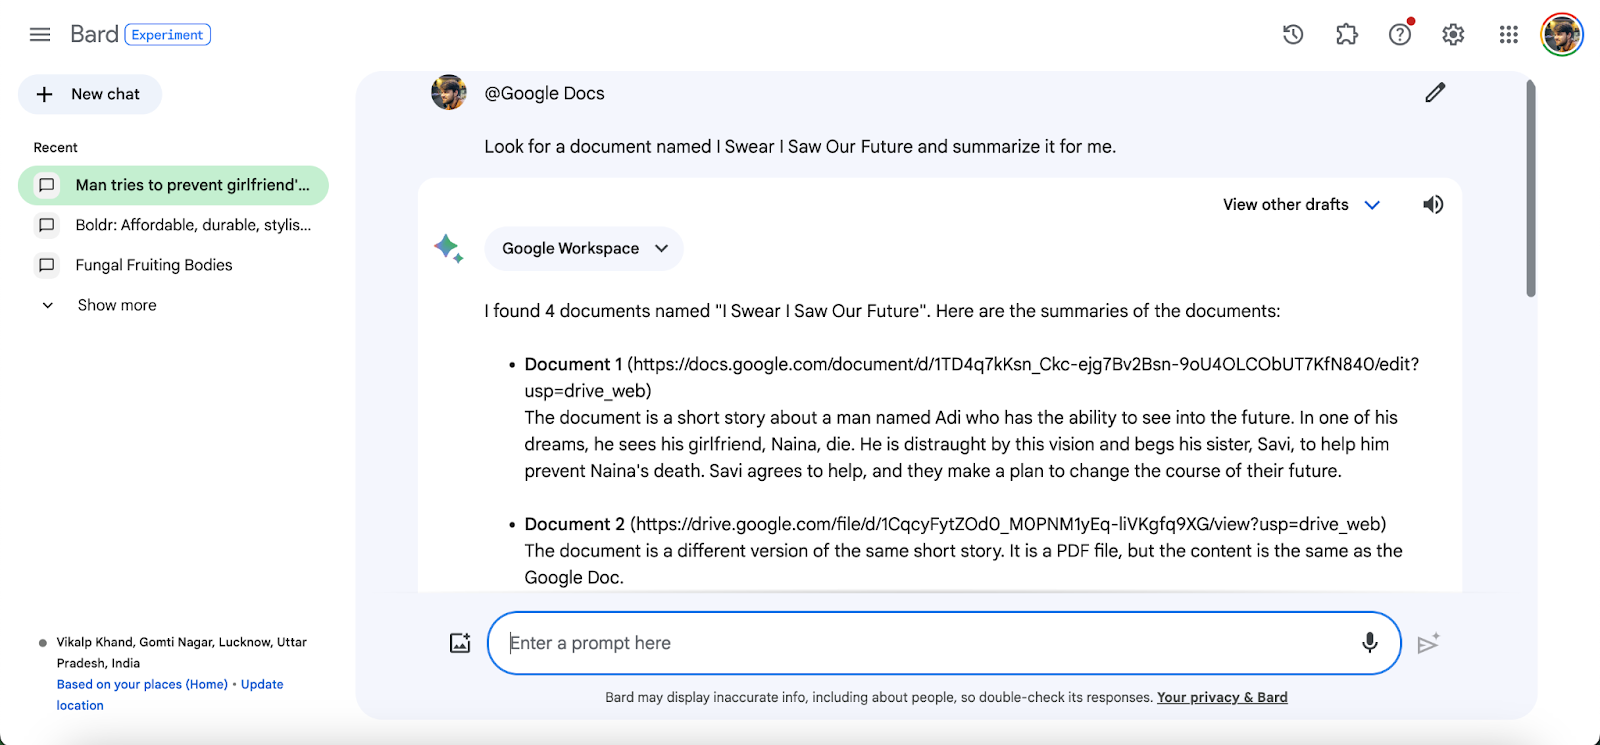 Google Docs integrations - Asking Bard to summarize a Google Docs document